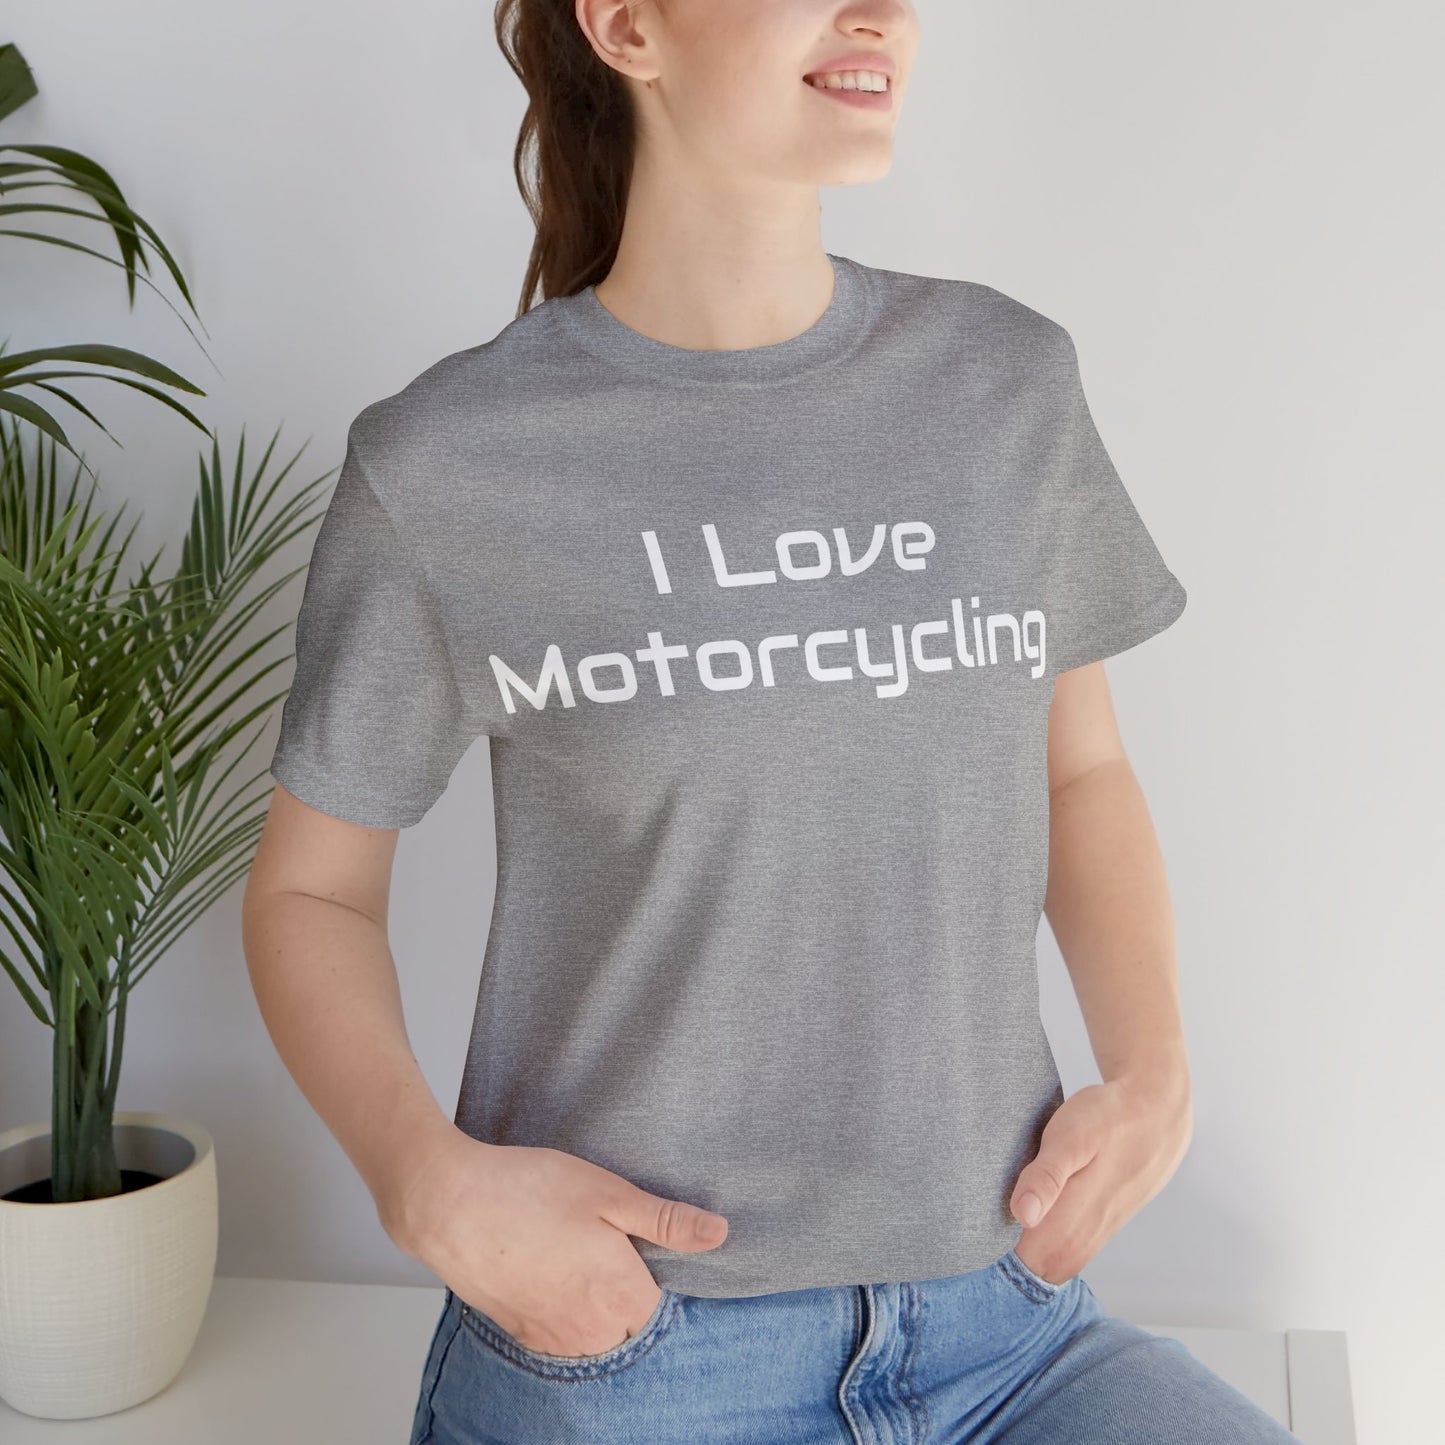 Motorcyclist Gift Idea | Motor Lover T-Shirt T-Shirt Petrova Designs